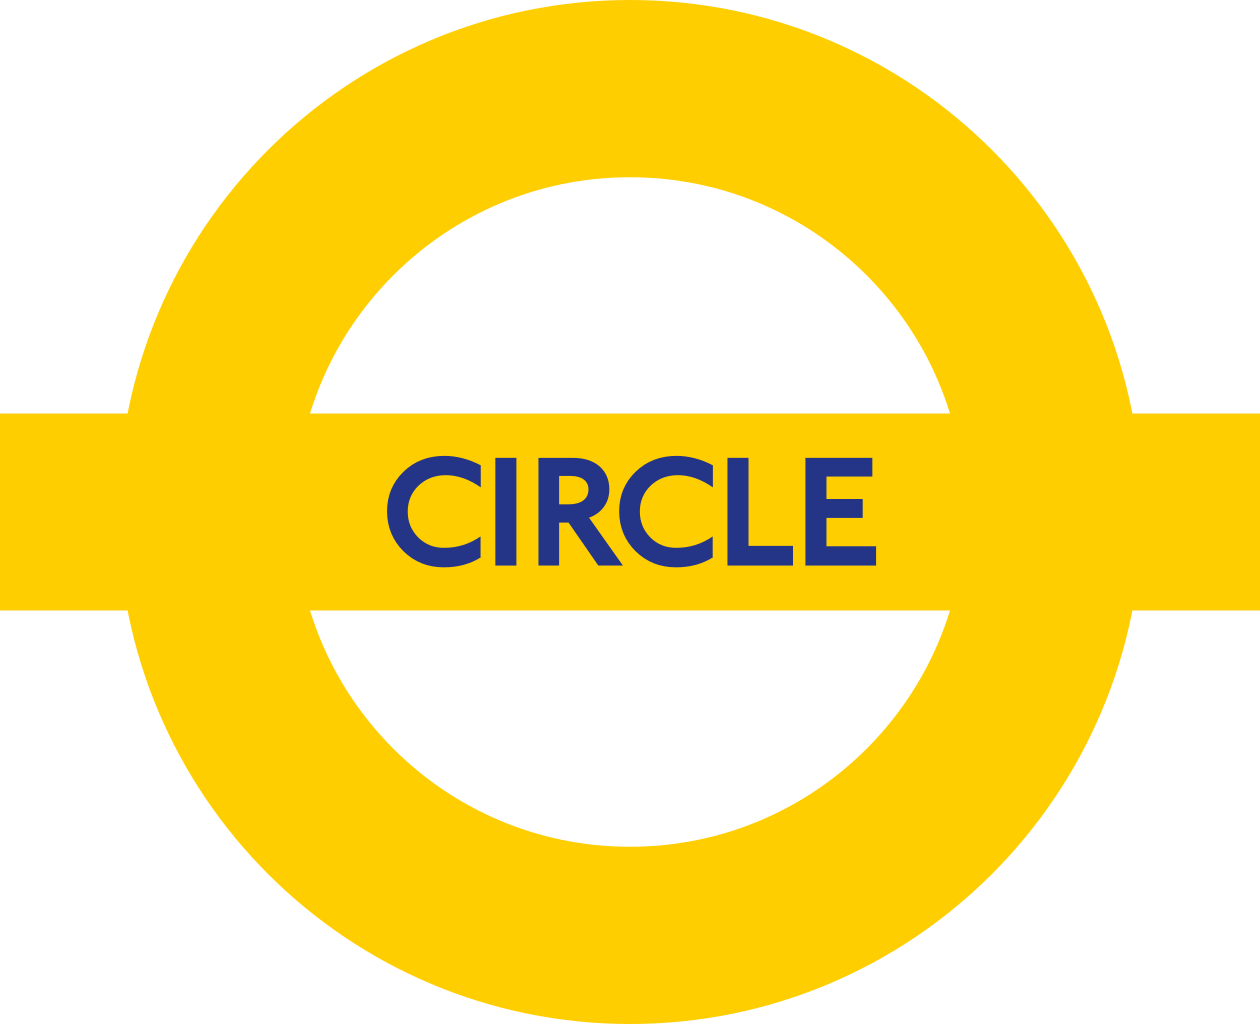 Circle Line Roundel - Underground Circle Line Sign (1260x1024)